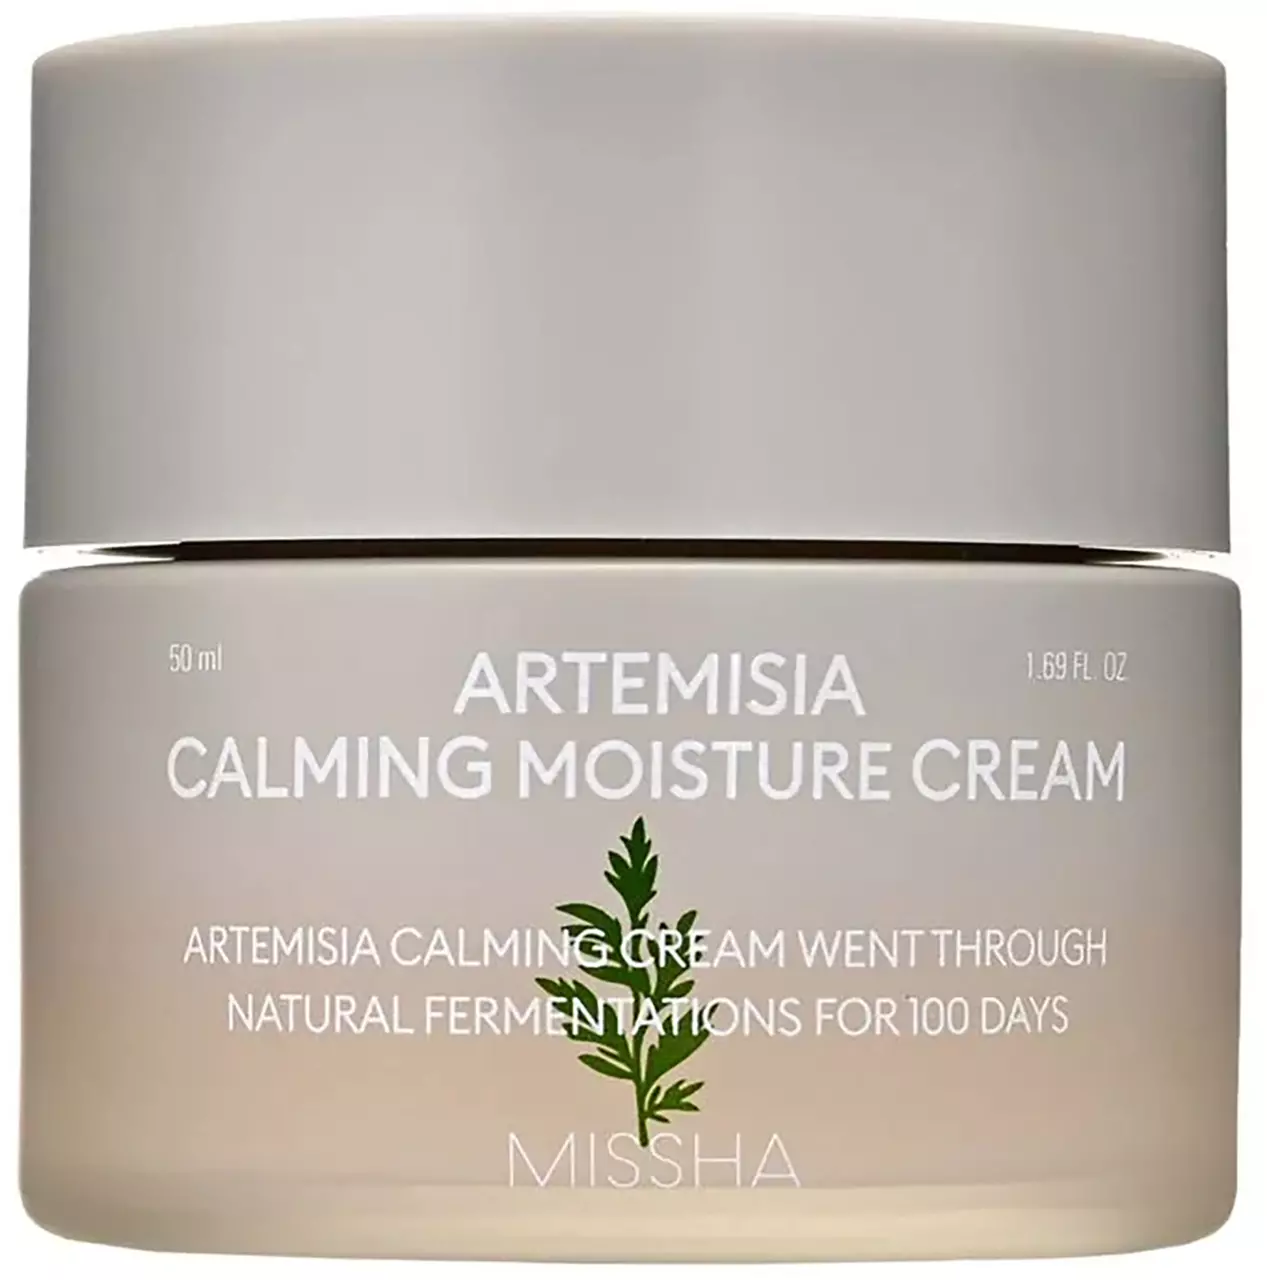 missha-artemisia-calming-moisture-cream-50ml-2273-322-0050_1.jpg